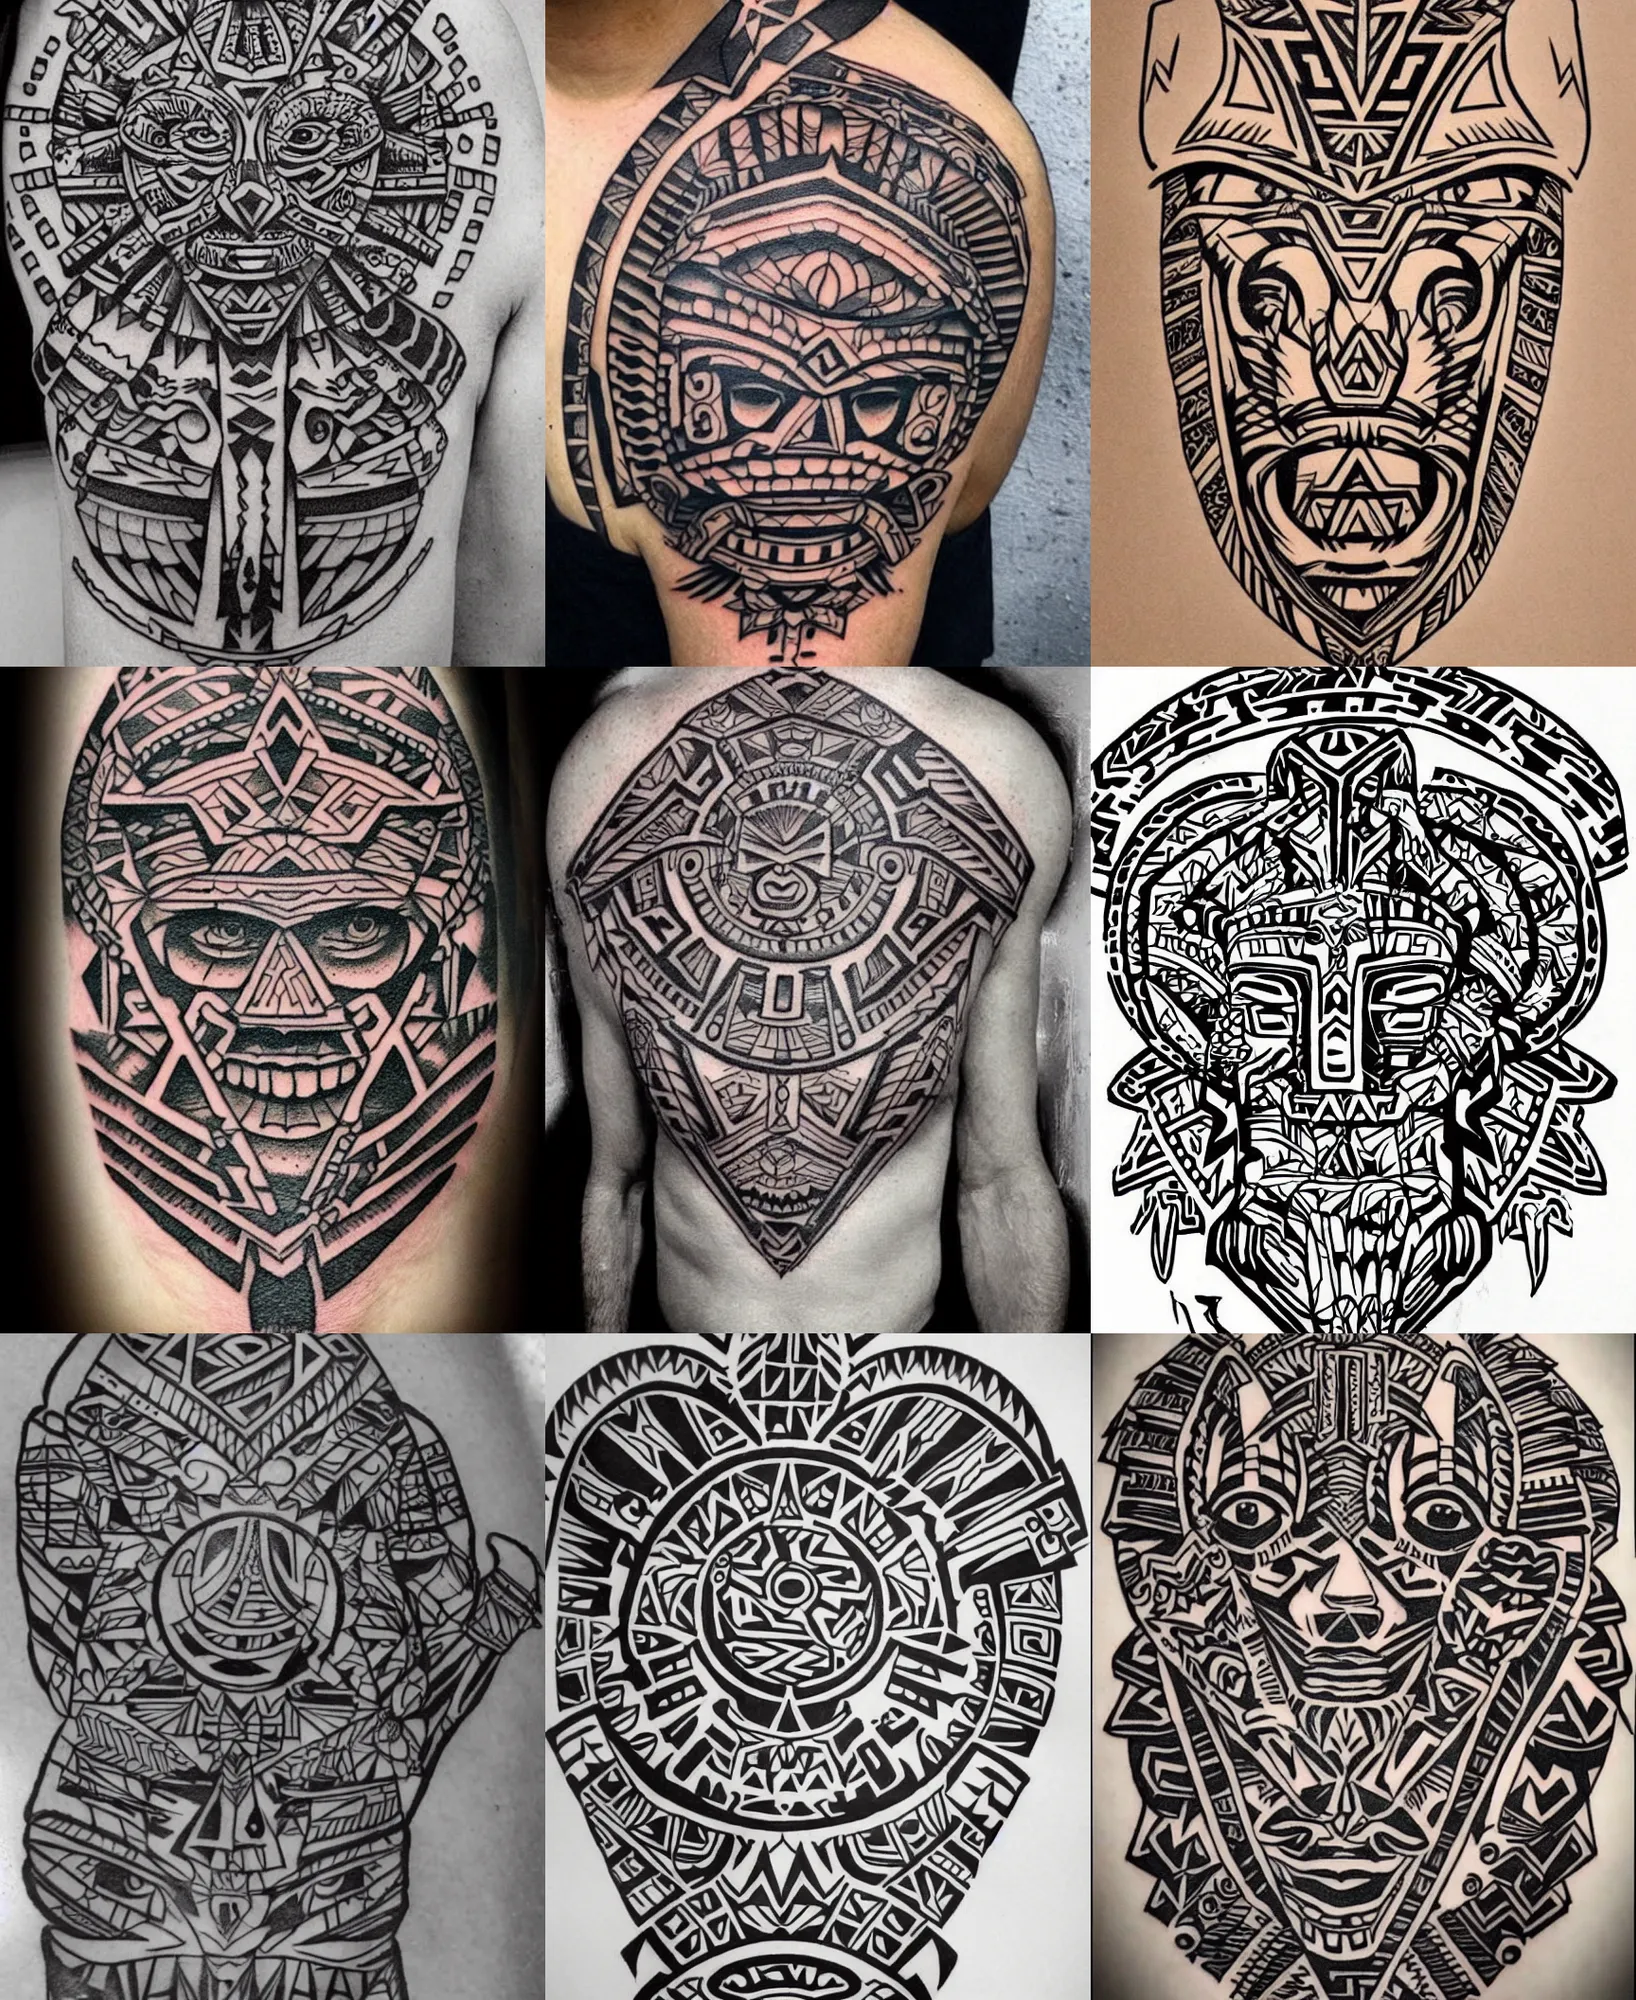 Prompt: amazing detailed aztec tattoo stencil